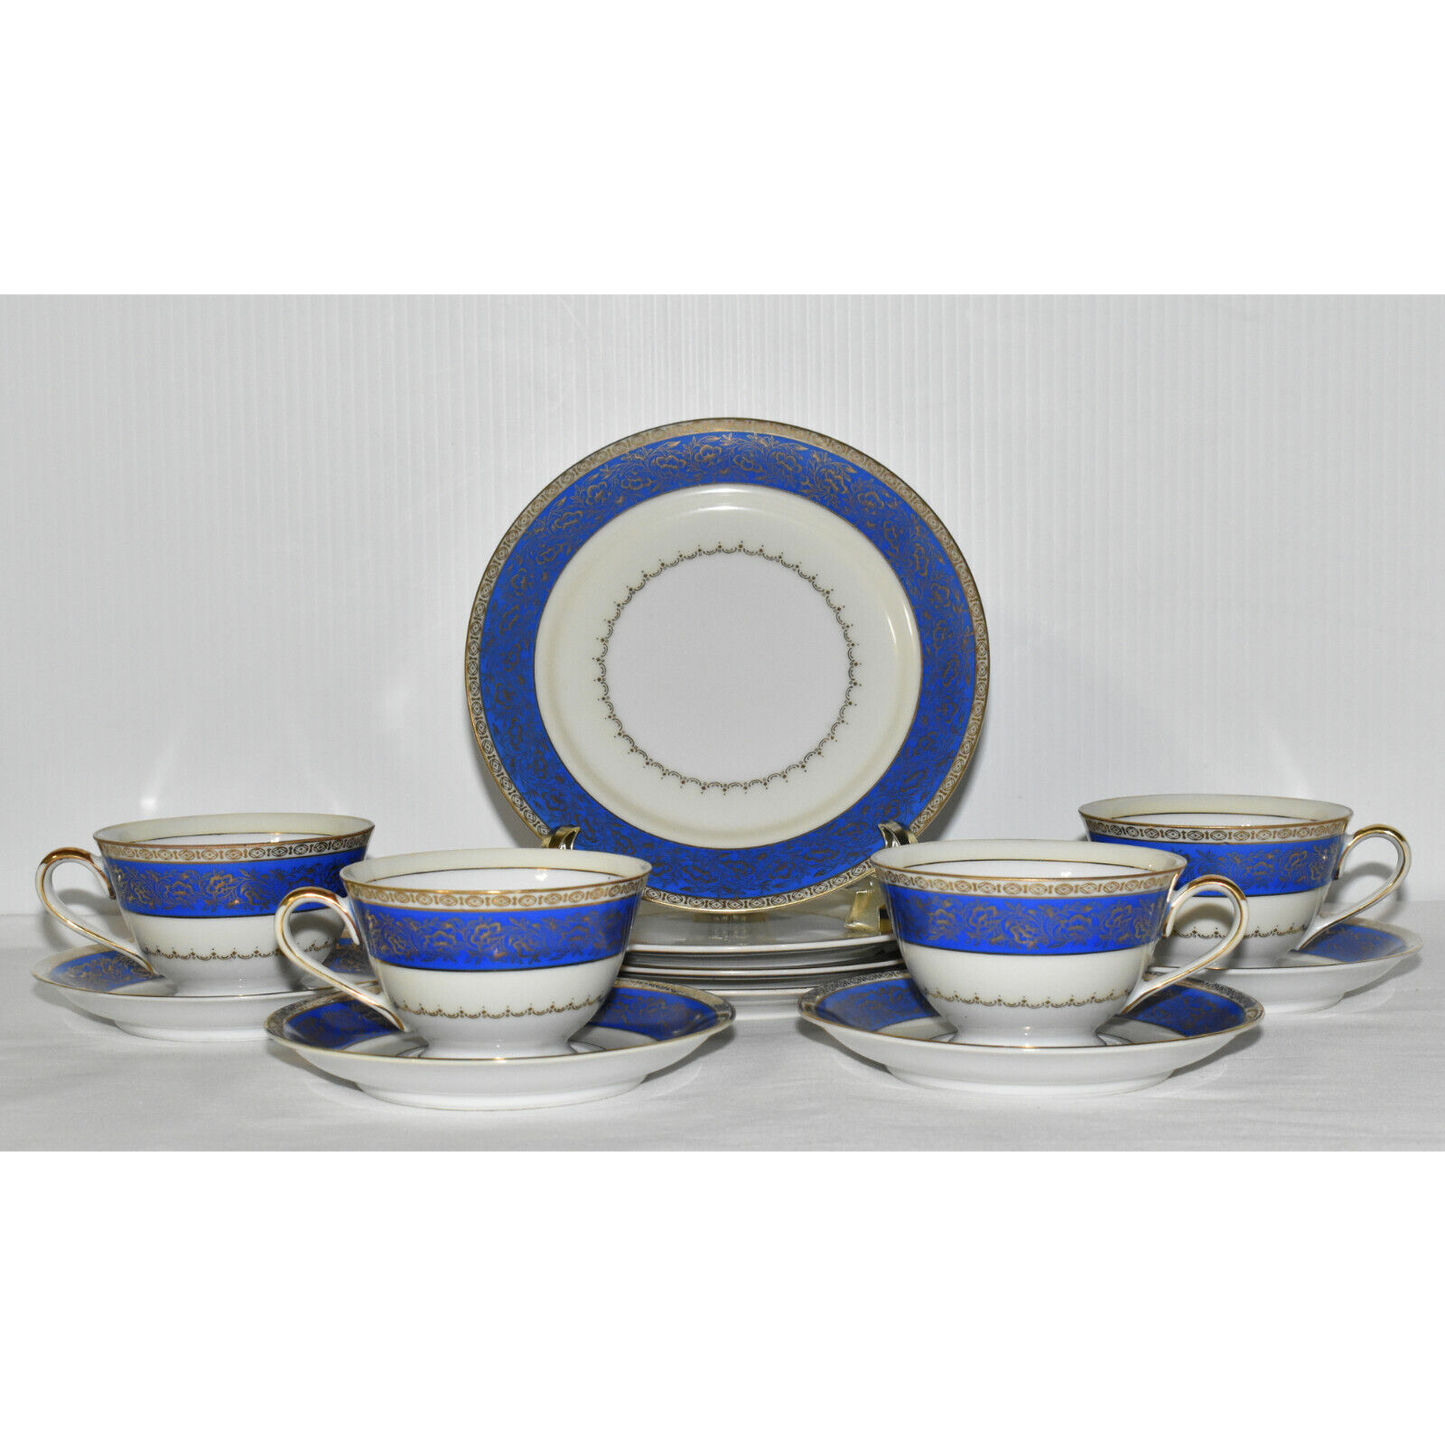 Rare Antique Porcelain Plates Teacups & Saucers 12pc Set Marked "Pretty China"